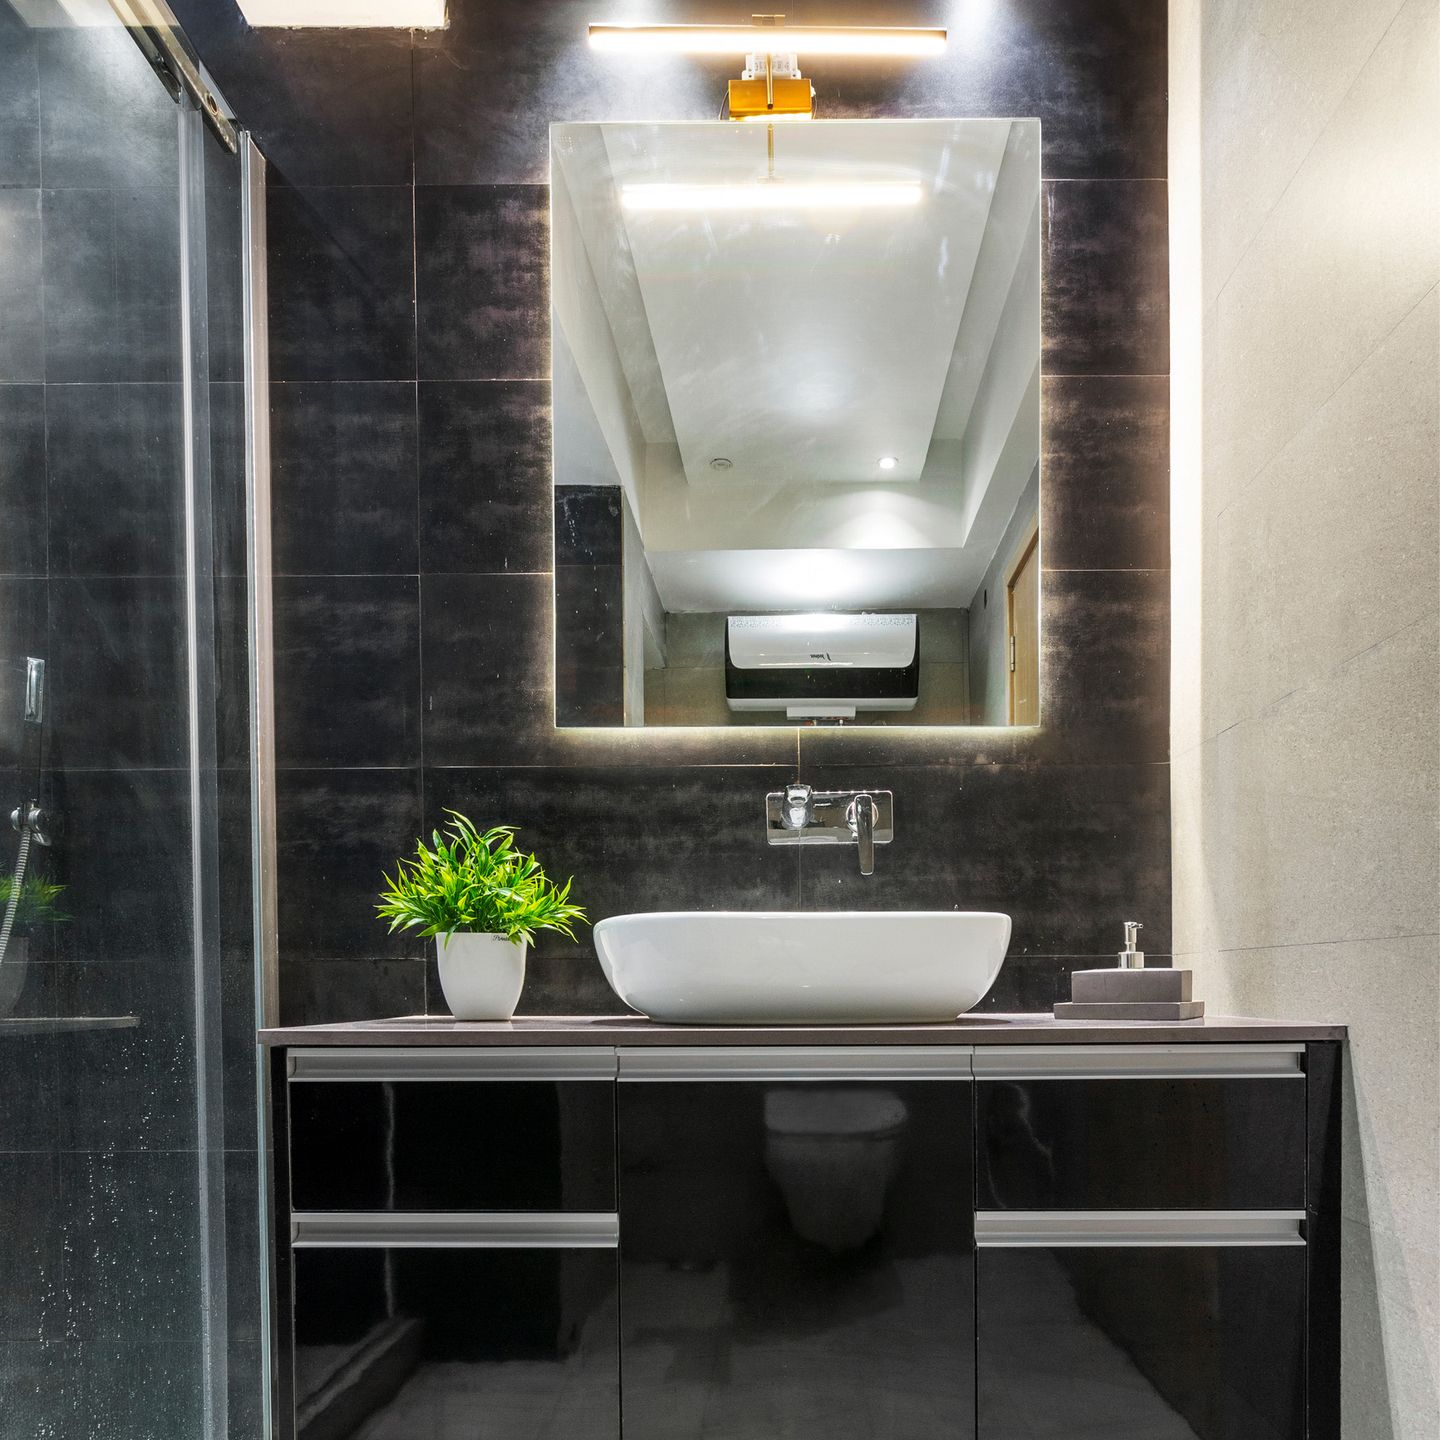 Small Bathroom Design With A Shower Area - Livspace